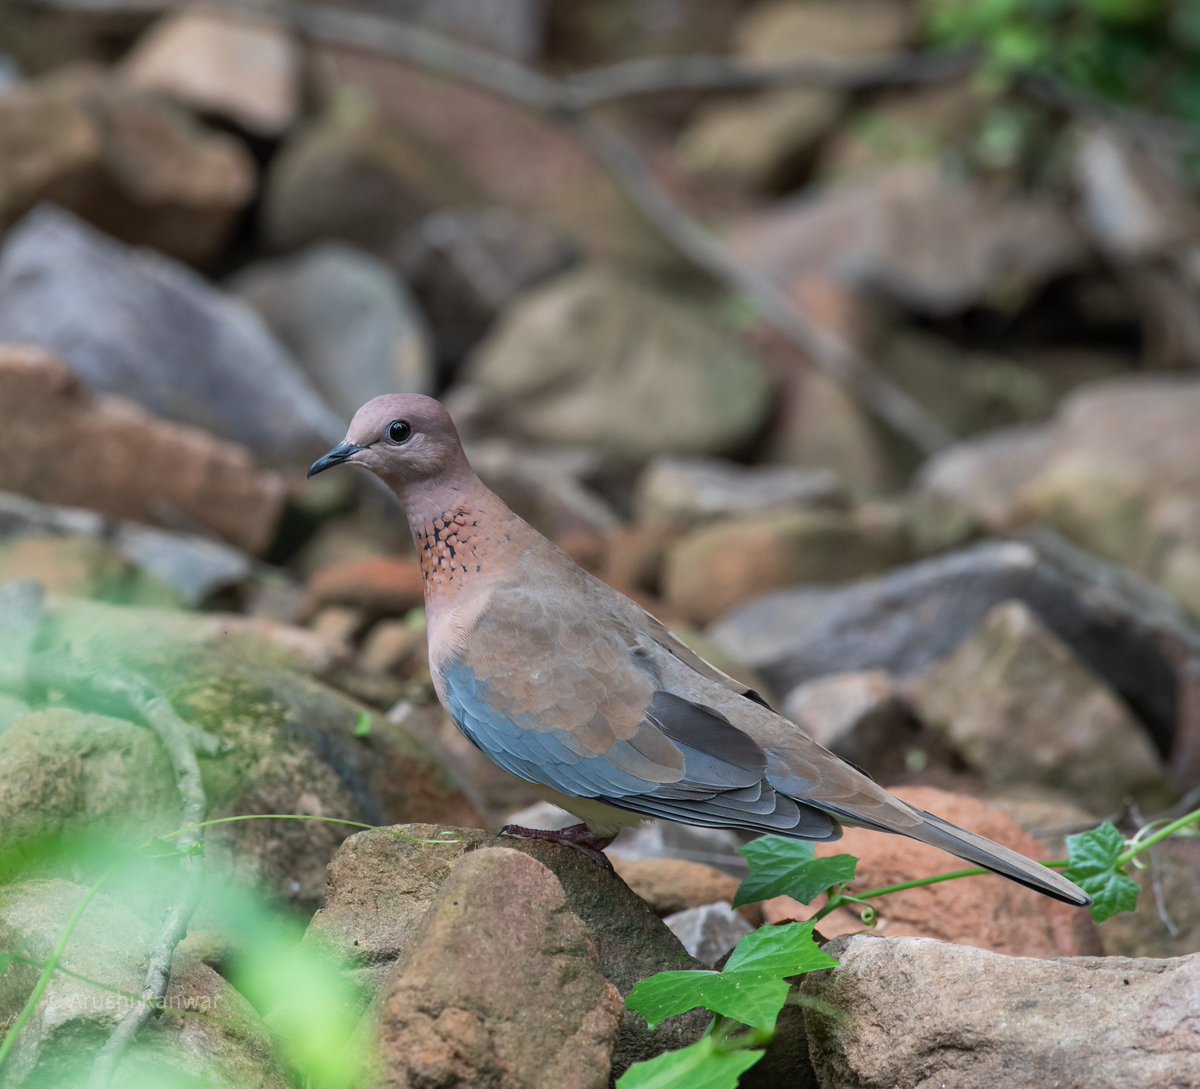 Laughing dove

#BackyardBirds #IndiAves 

#BirdsSeenIn2023 #BirdsofTwitter #BirdsOfAFeather #naturelovers #natgeoindia #sanctuaryasia #Nikon #TwitterNatureCommunity #birdlovers